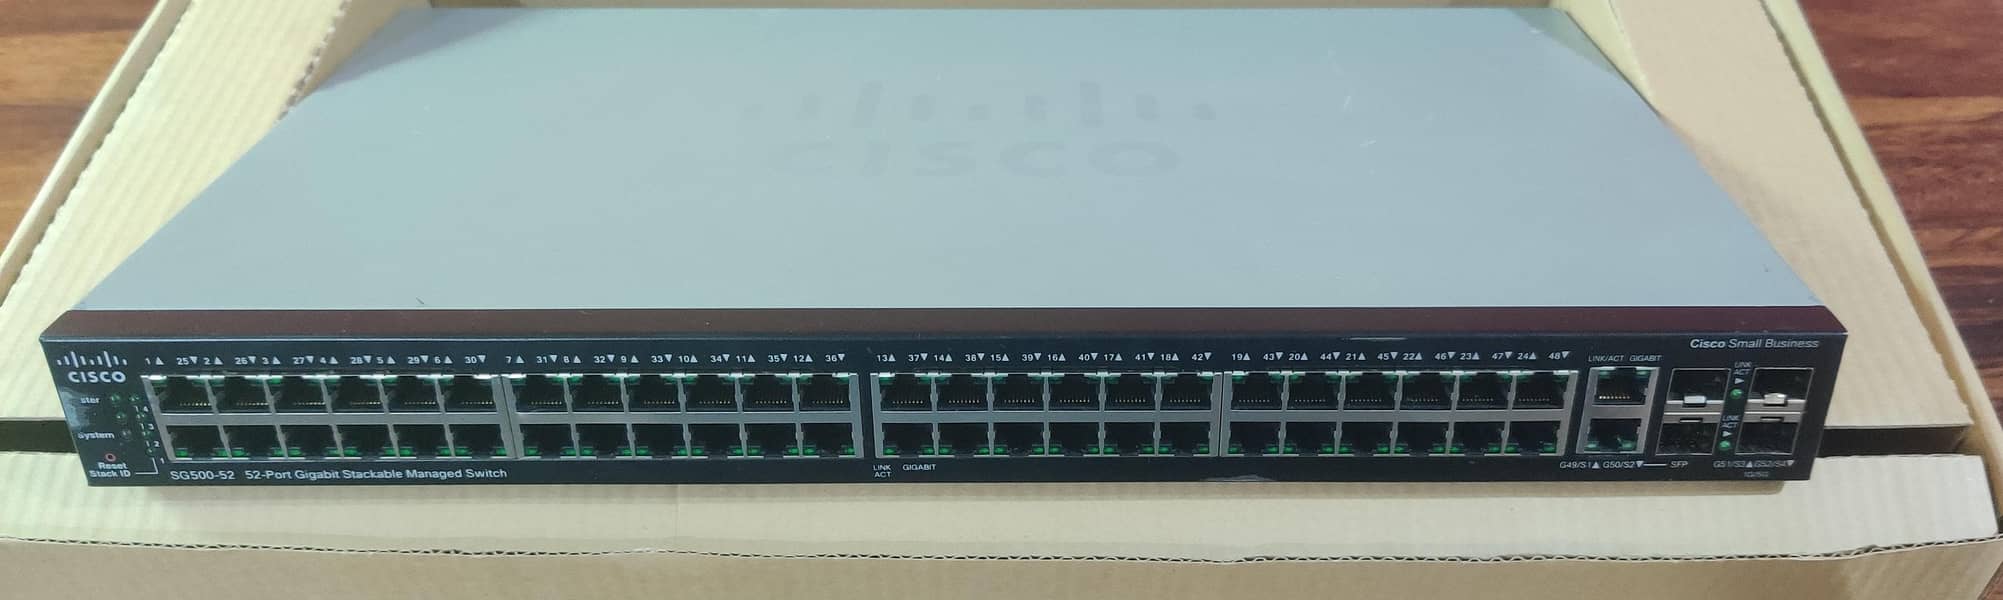 Cisco SG500-52 52-Ports Gigabit Manageable Switch (Open Box) 3